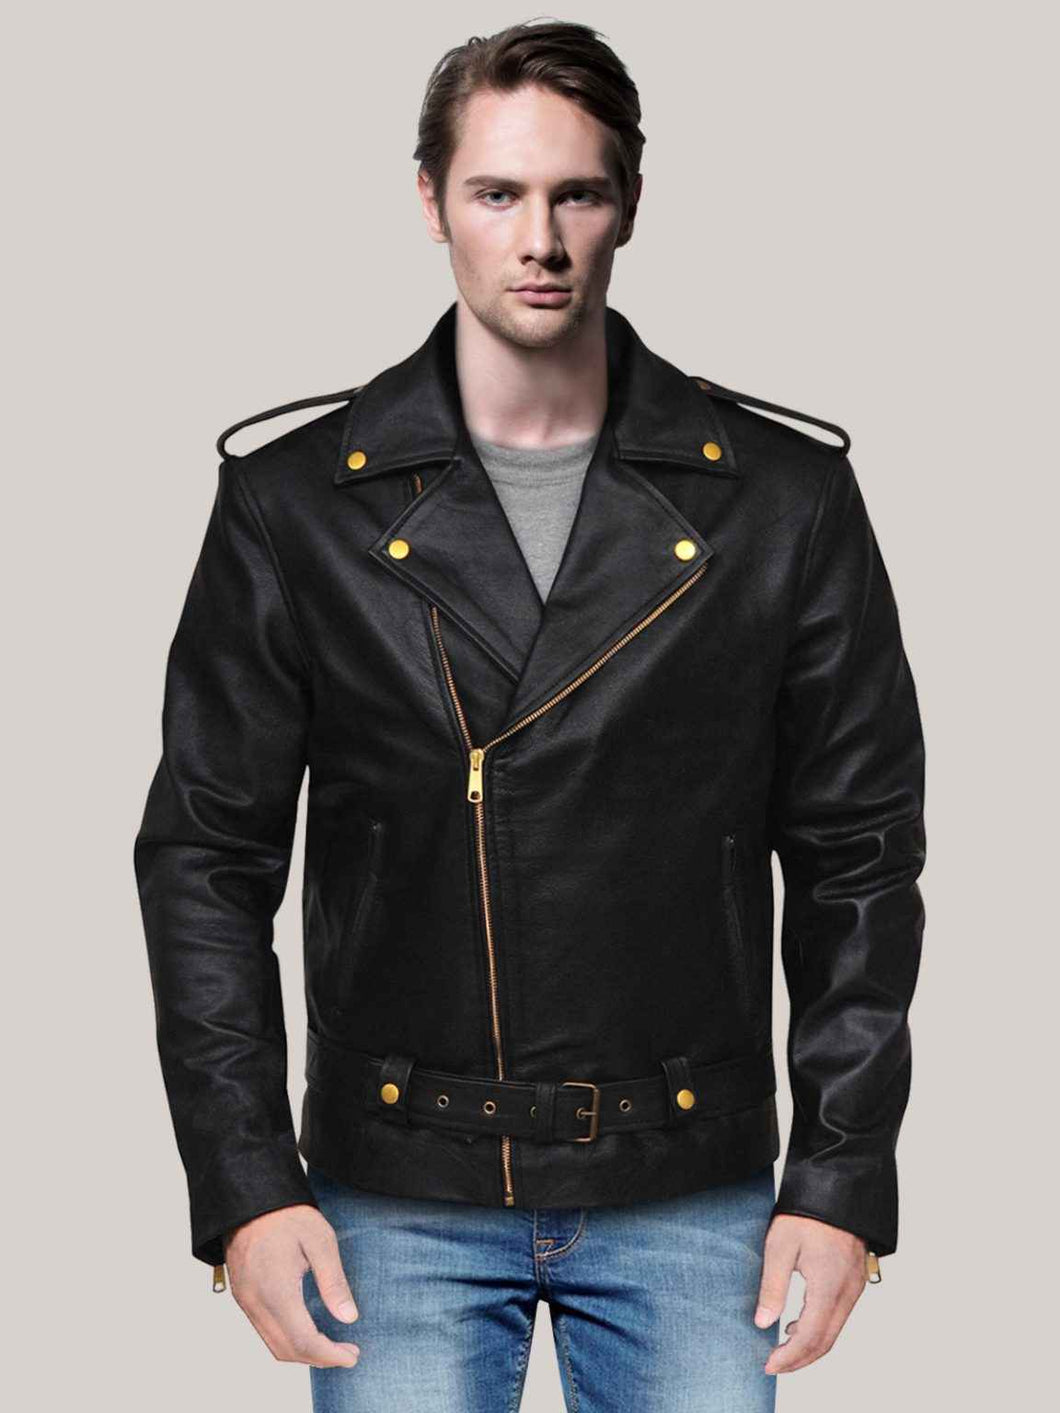 Black Leather Jacket For Men | Boneshia.com